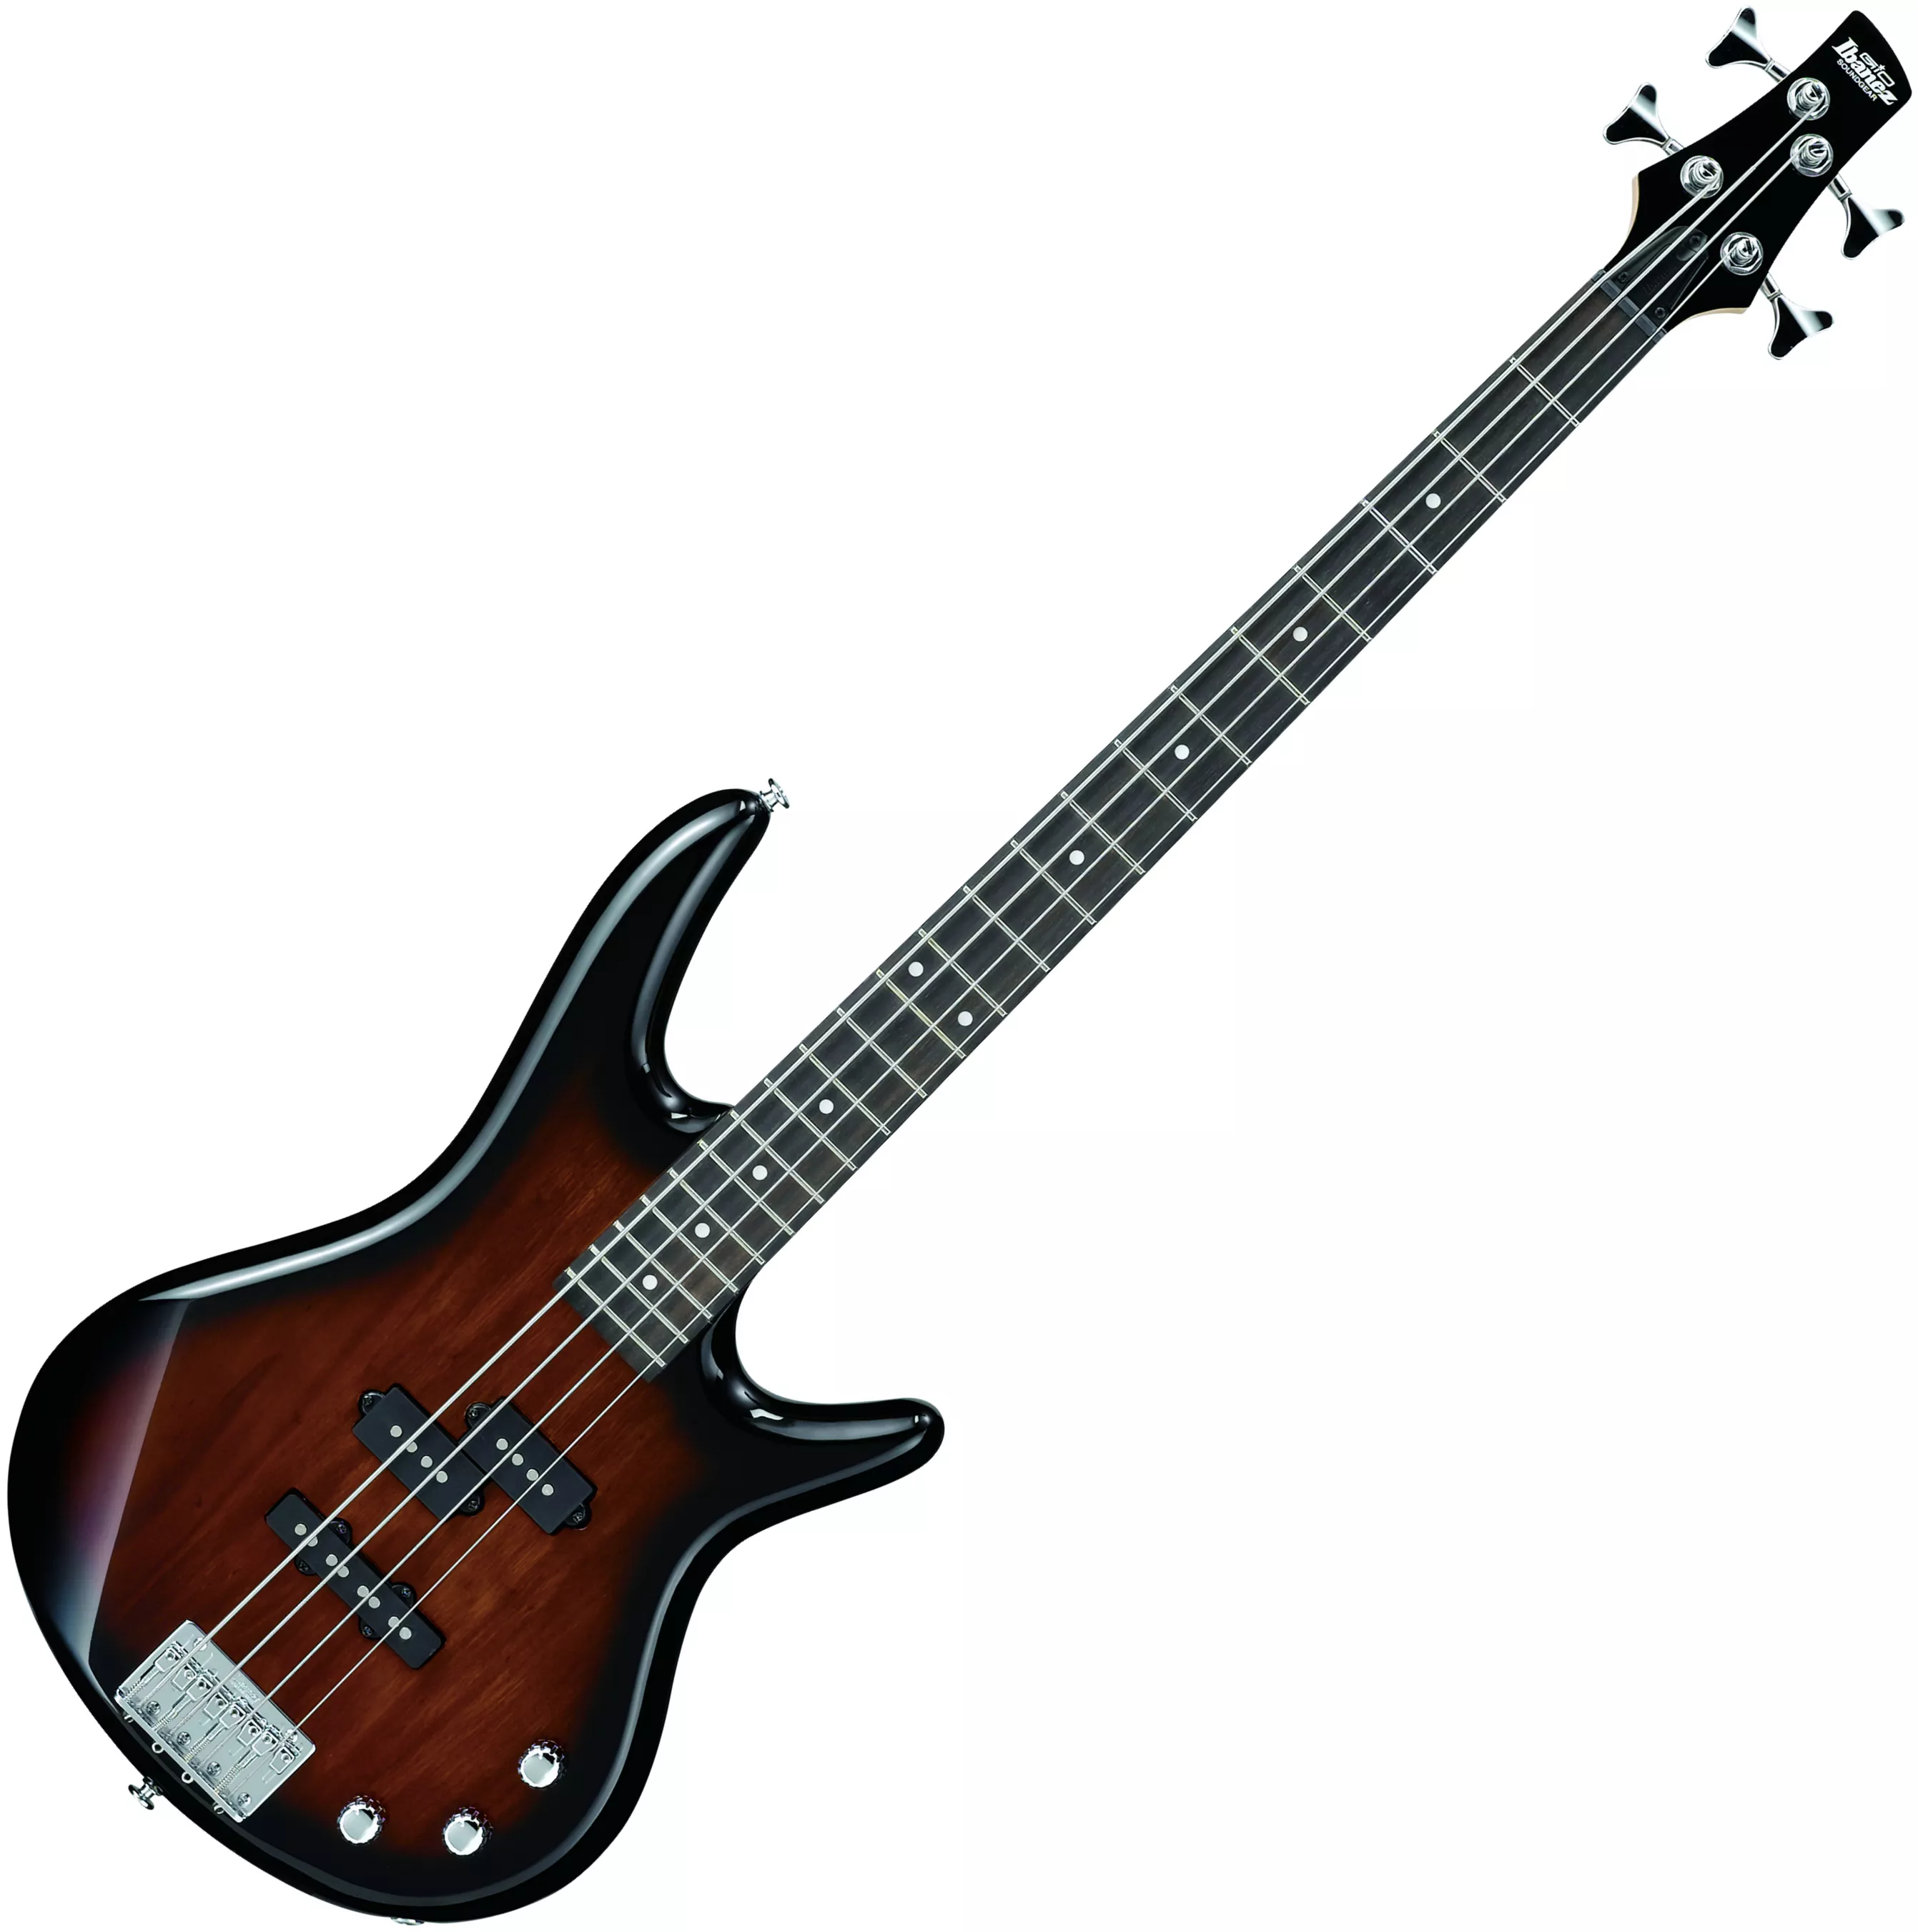 Полны басс. Ibanez gsr205 Red. Ibanez gsr300. Бас-гитара Ibanez gsr012ltd. Ibanez Bass.